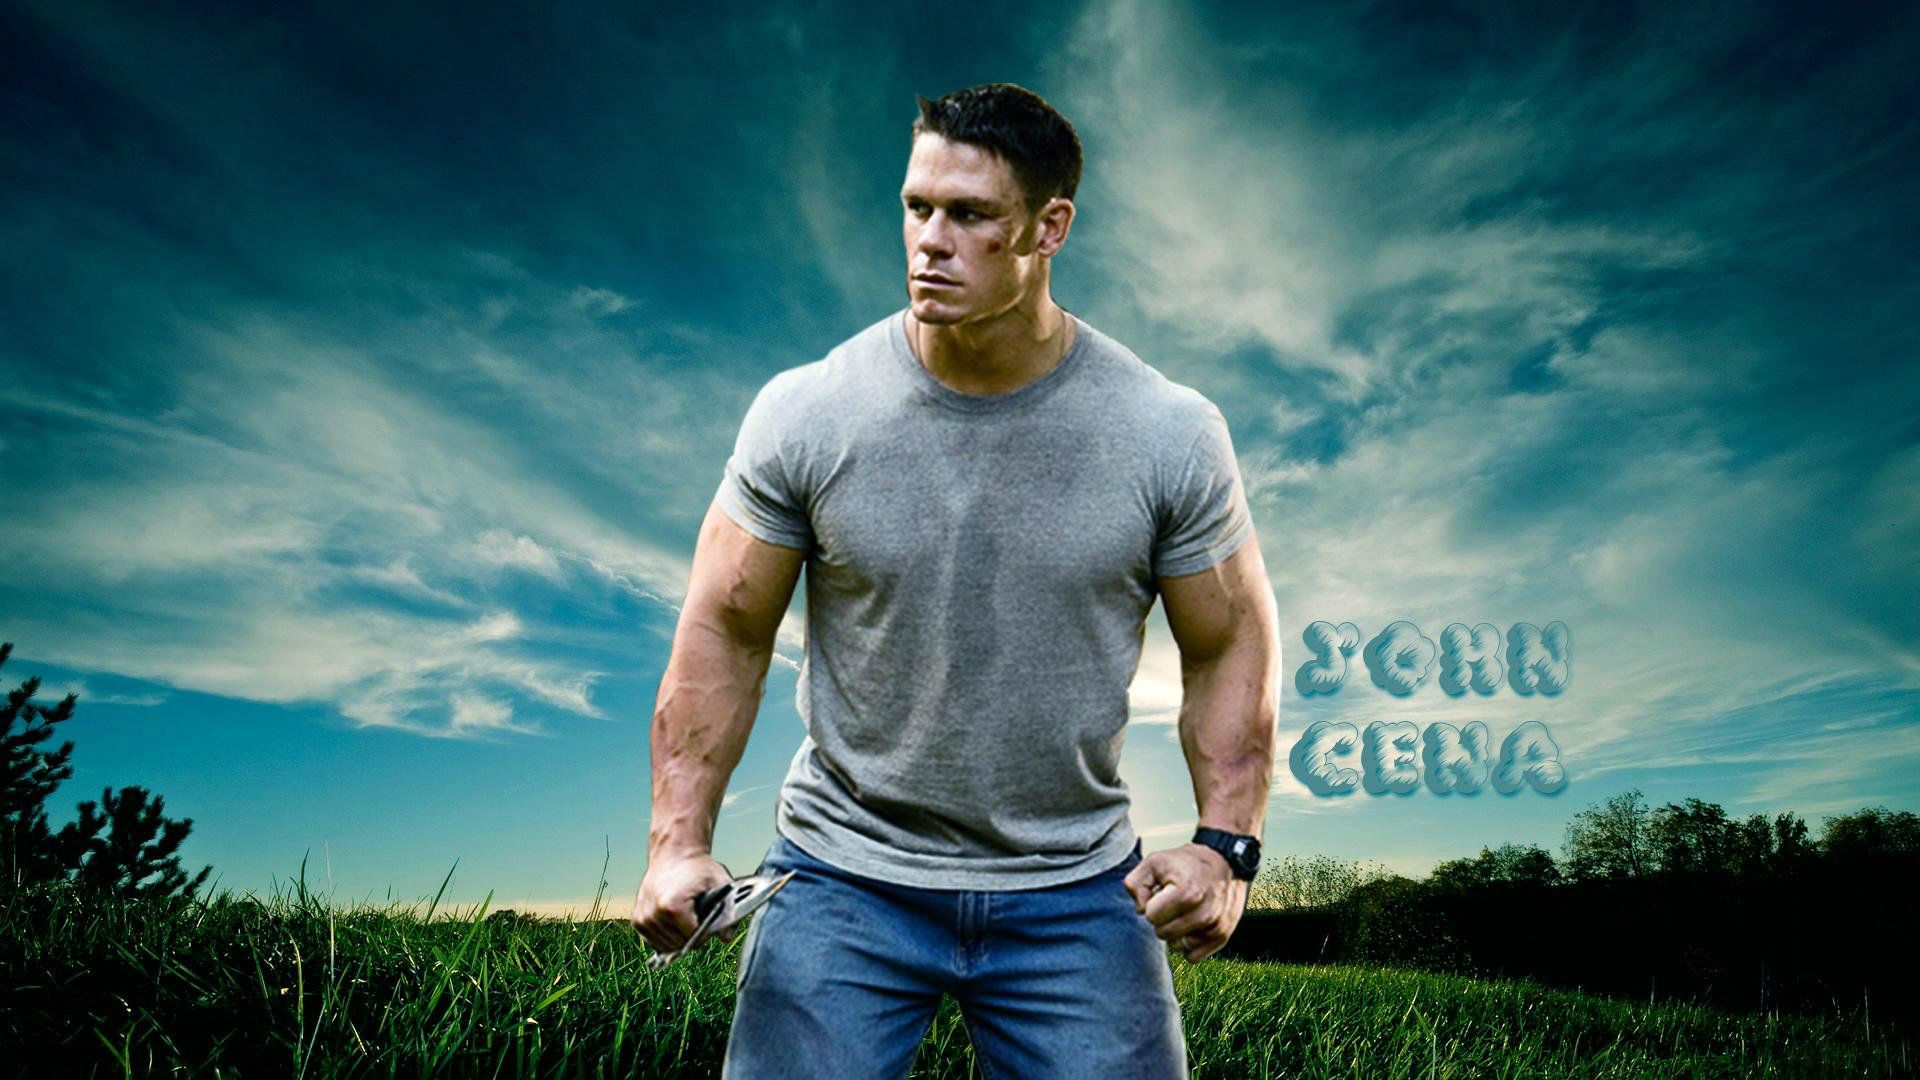 John Cena WWE HD Wallpapers | Most HD Wallpapers Pictures Desktop ...